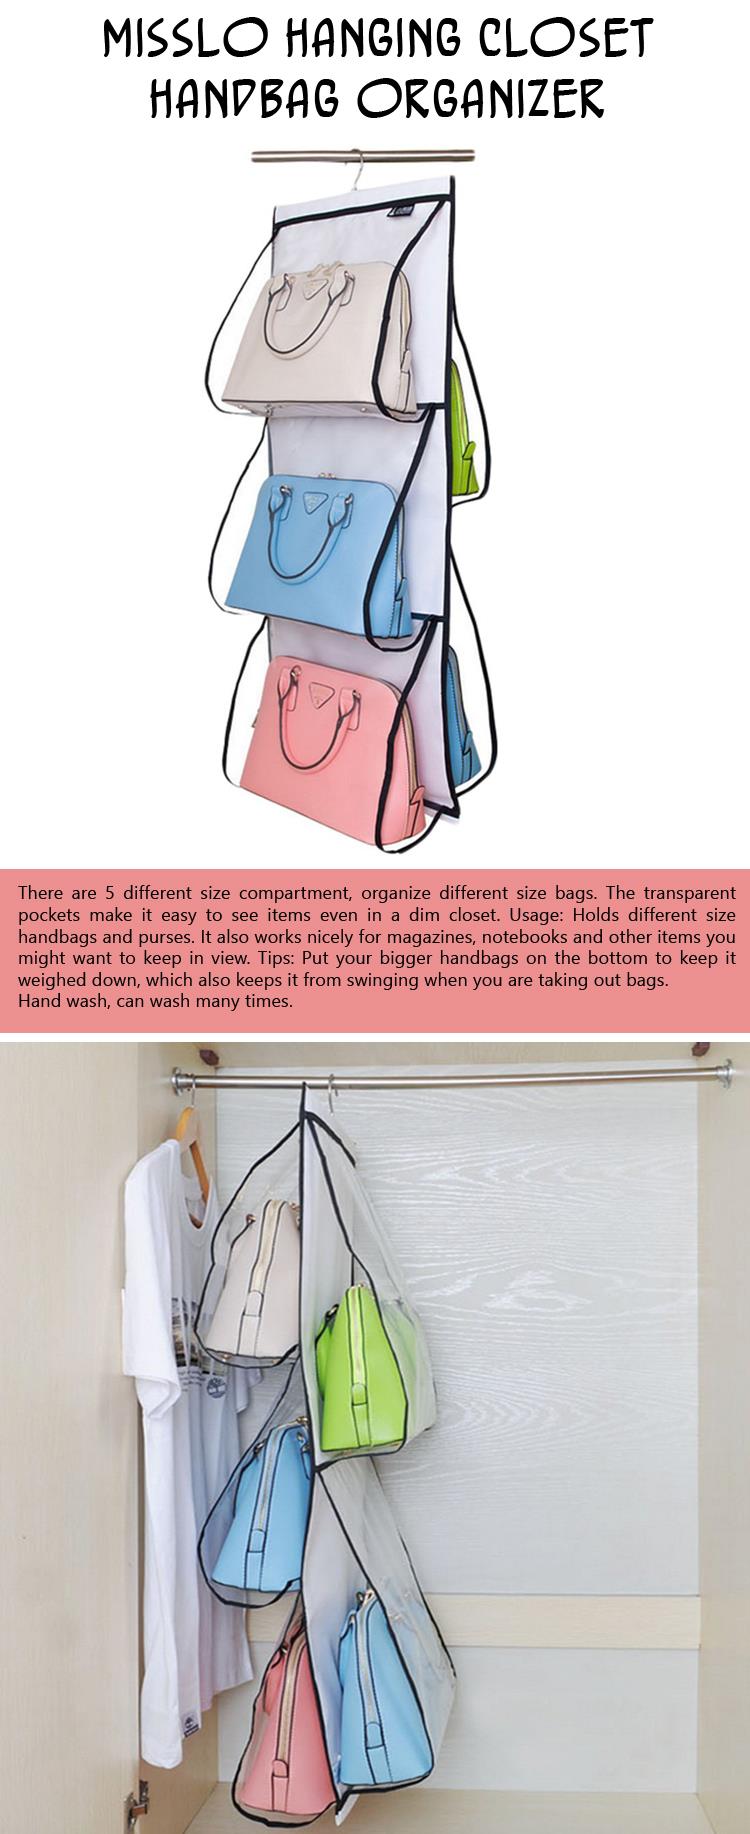 misslo-hanging-closet-handbag-organizer